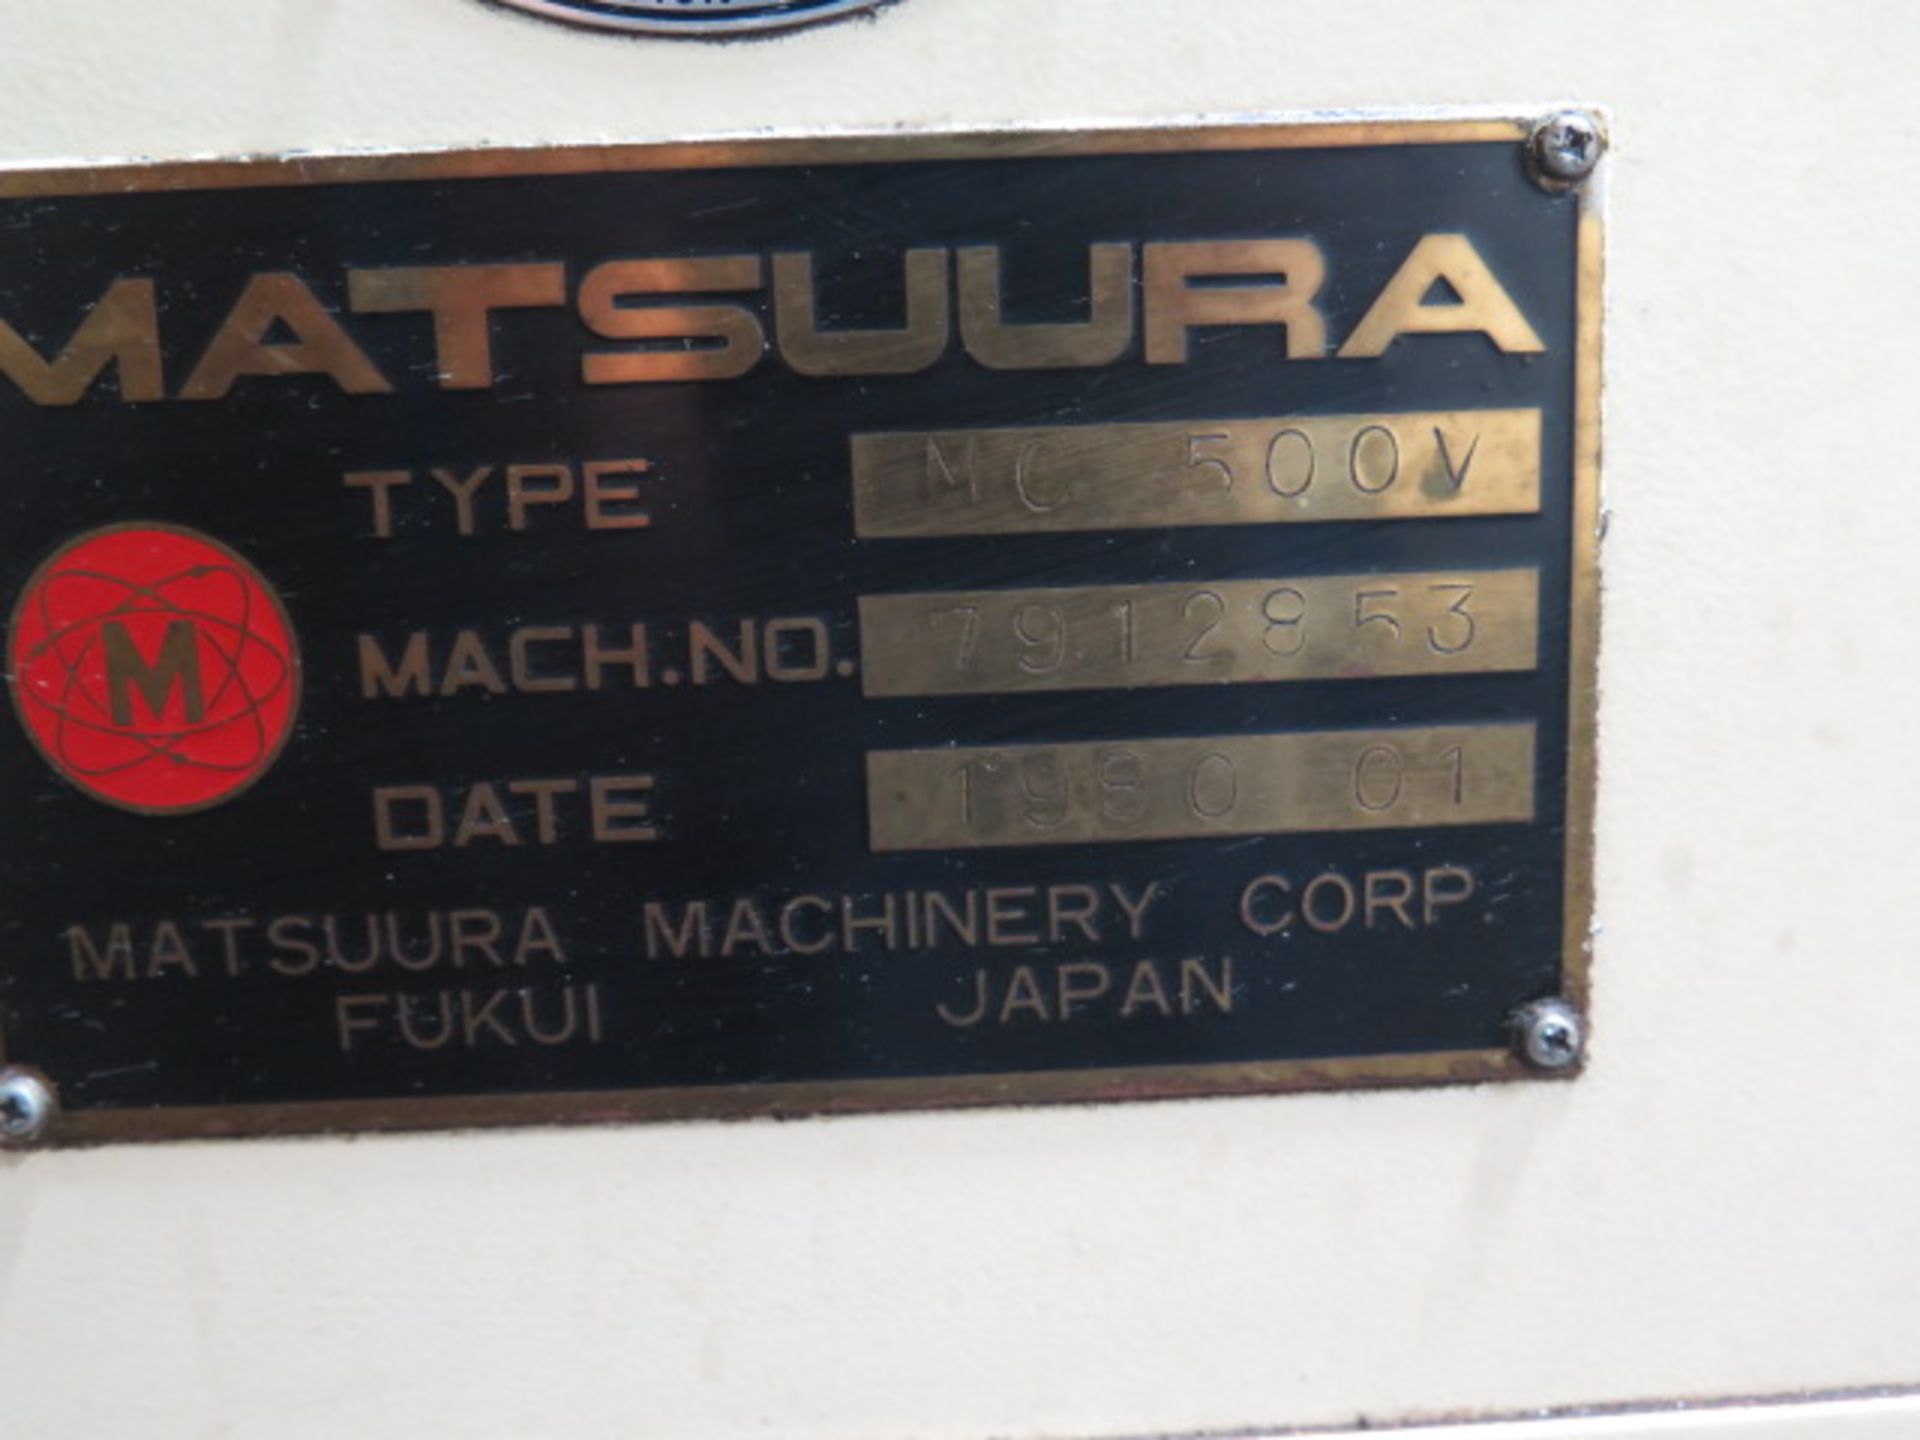 Matsuura “Mini-Master” MC-500V CNC Vertical Machining Center s/n 7912853 w/ Matsuura Yasnac System 5 - Image 11 of 12